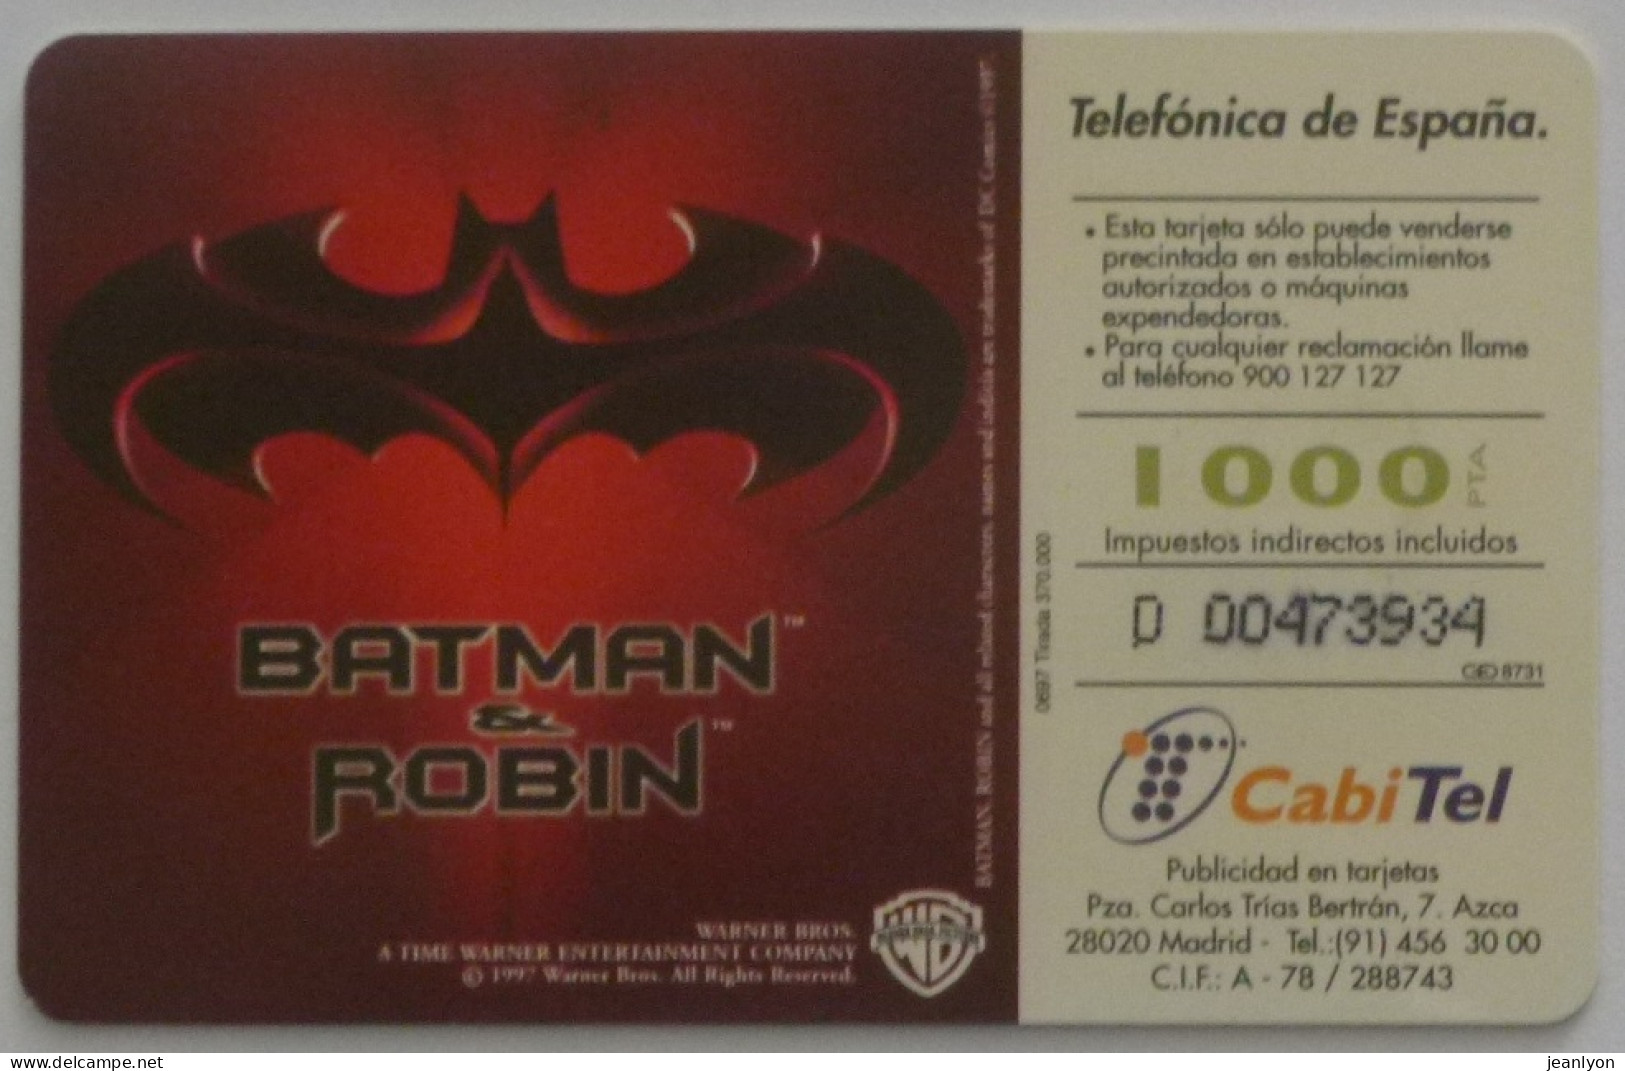 CINEMA - BATMAN ET ROBIN - Film Warner Bros - Carte Téléphone Espagne 1000 Utilisée - Cine